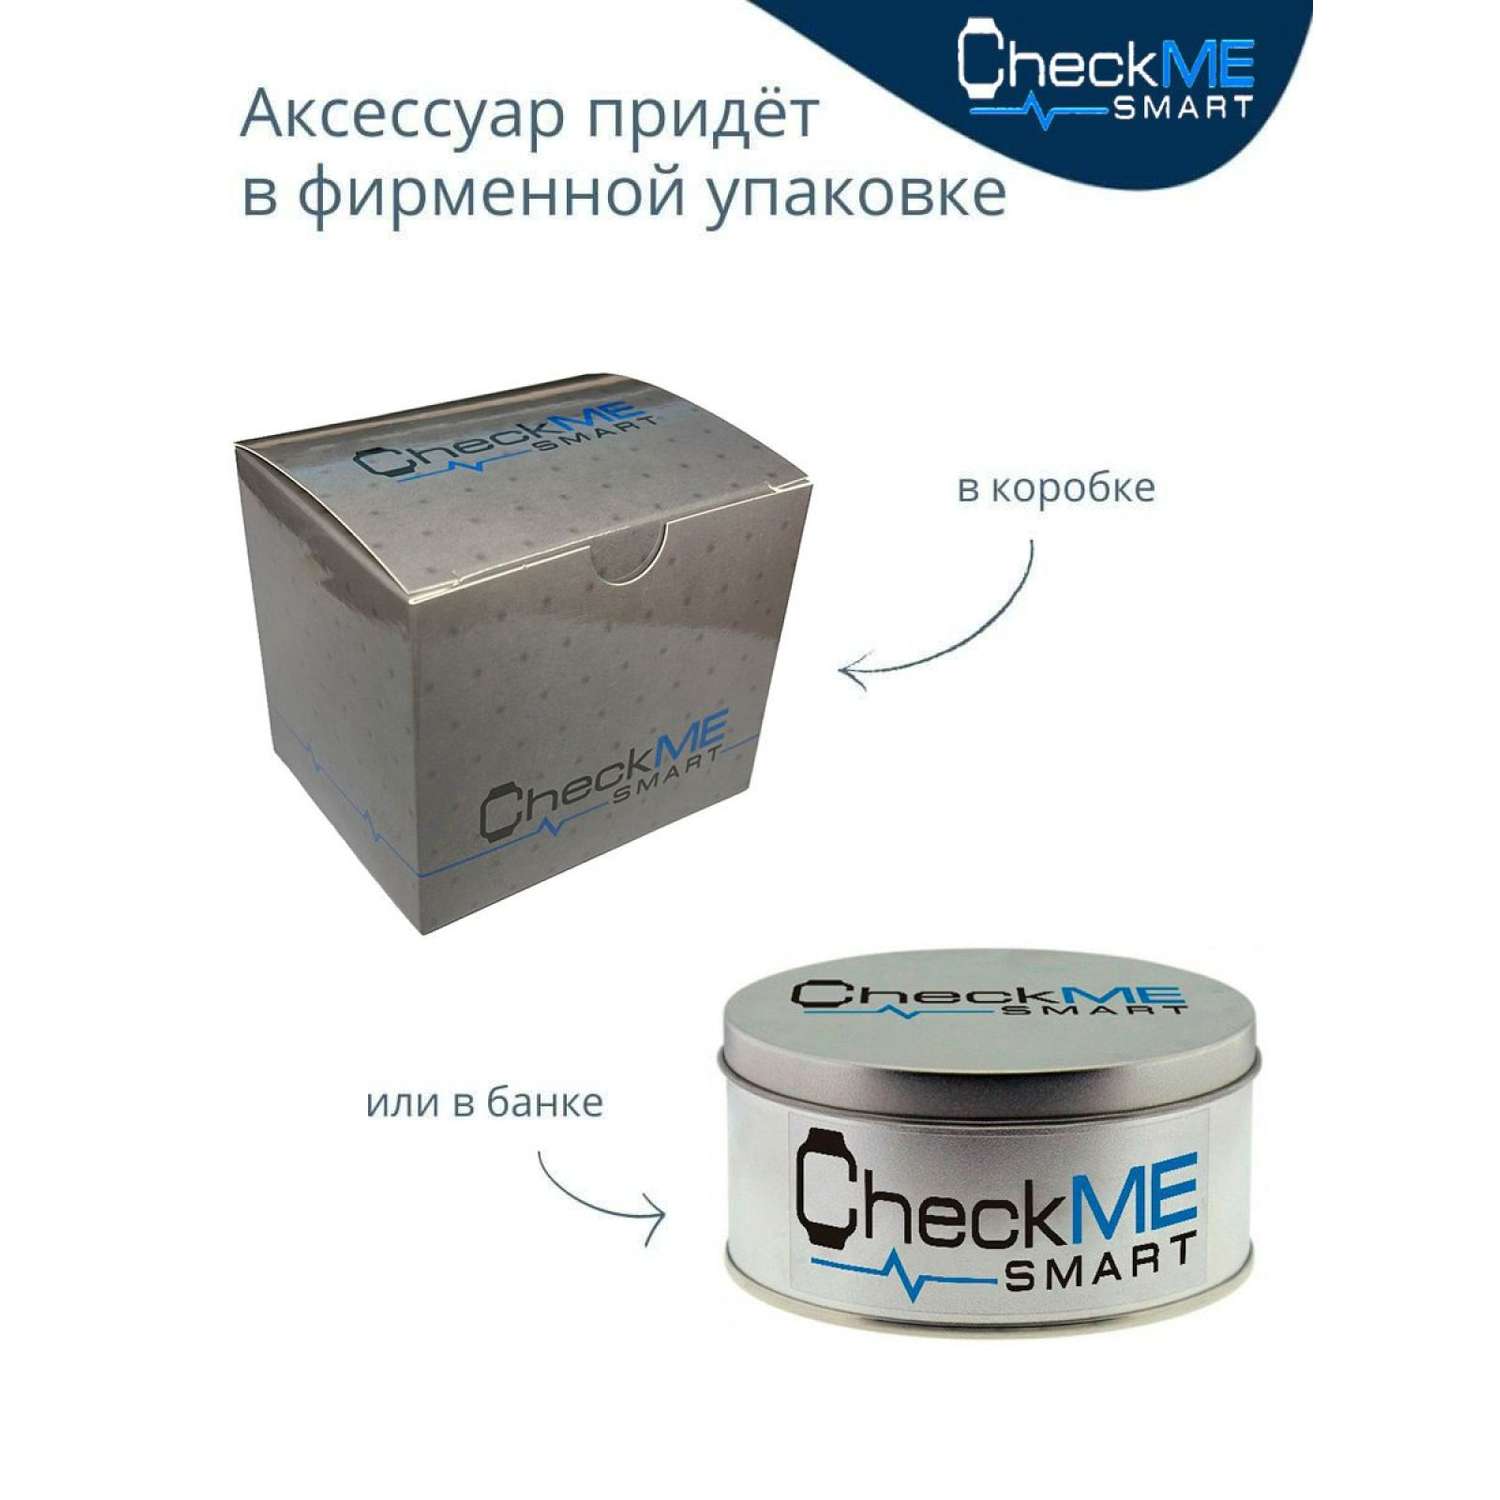 Фитнес-браслет CheckME Smart CMSE18PROSBB с шагомером измерением кислорода в крови фитнес-трекером - фото 7